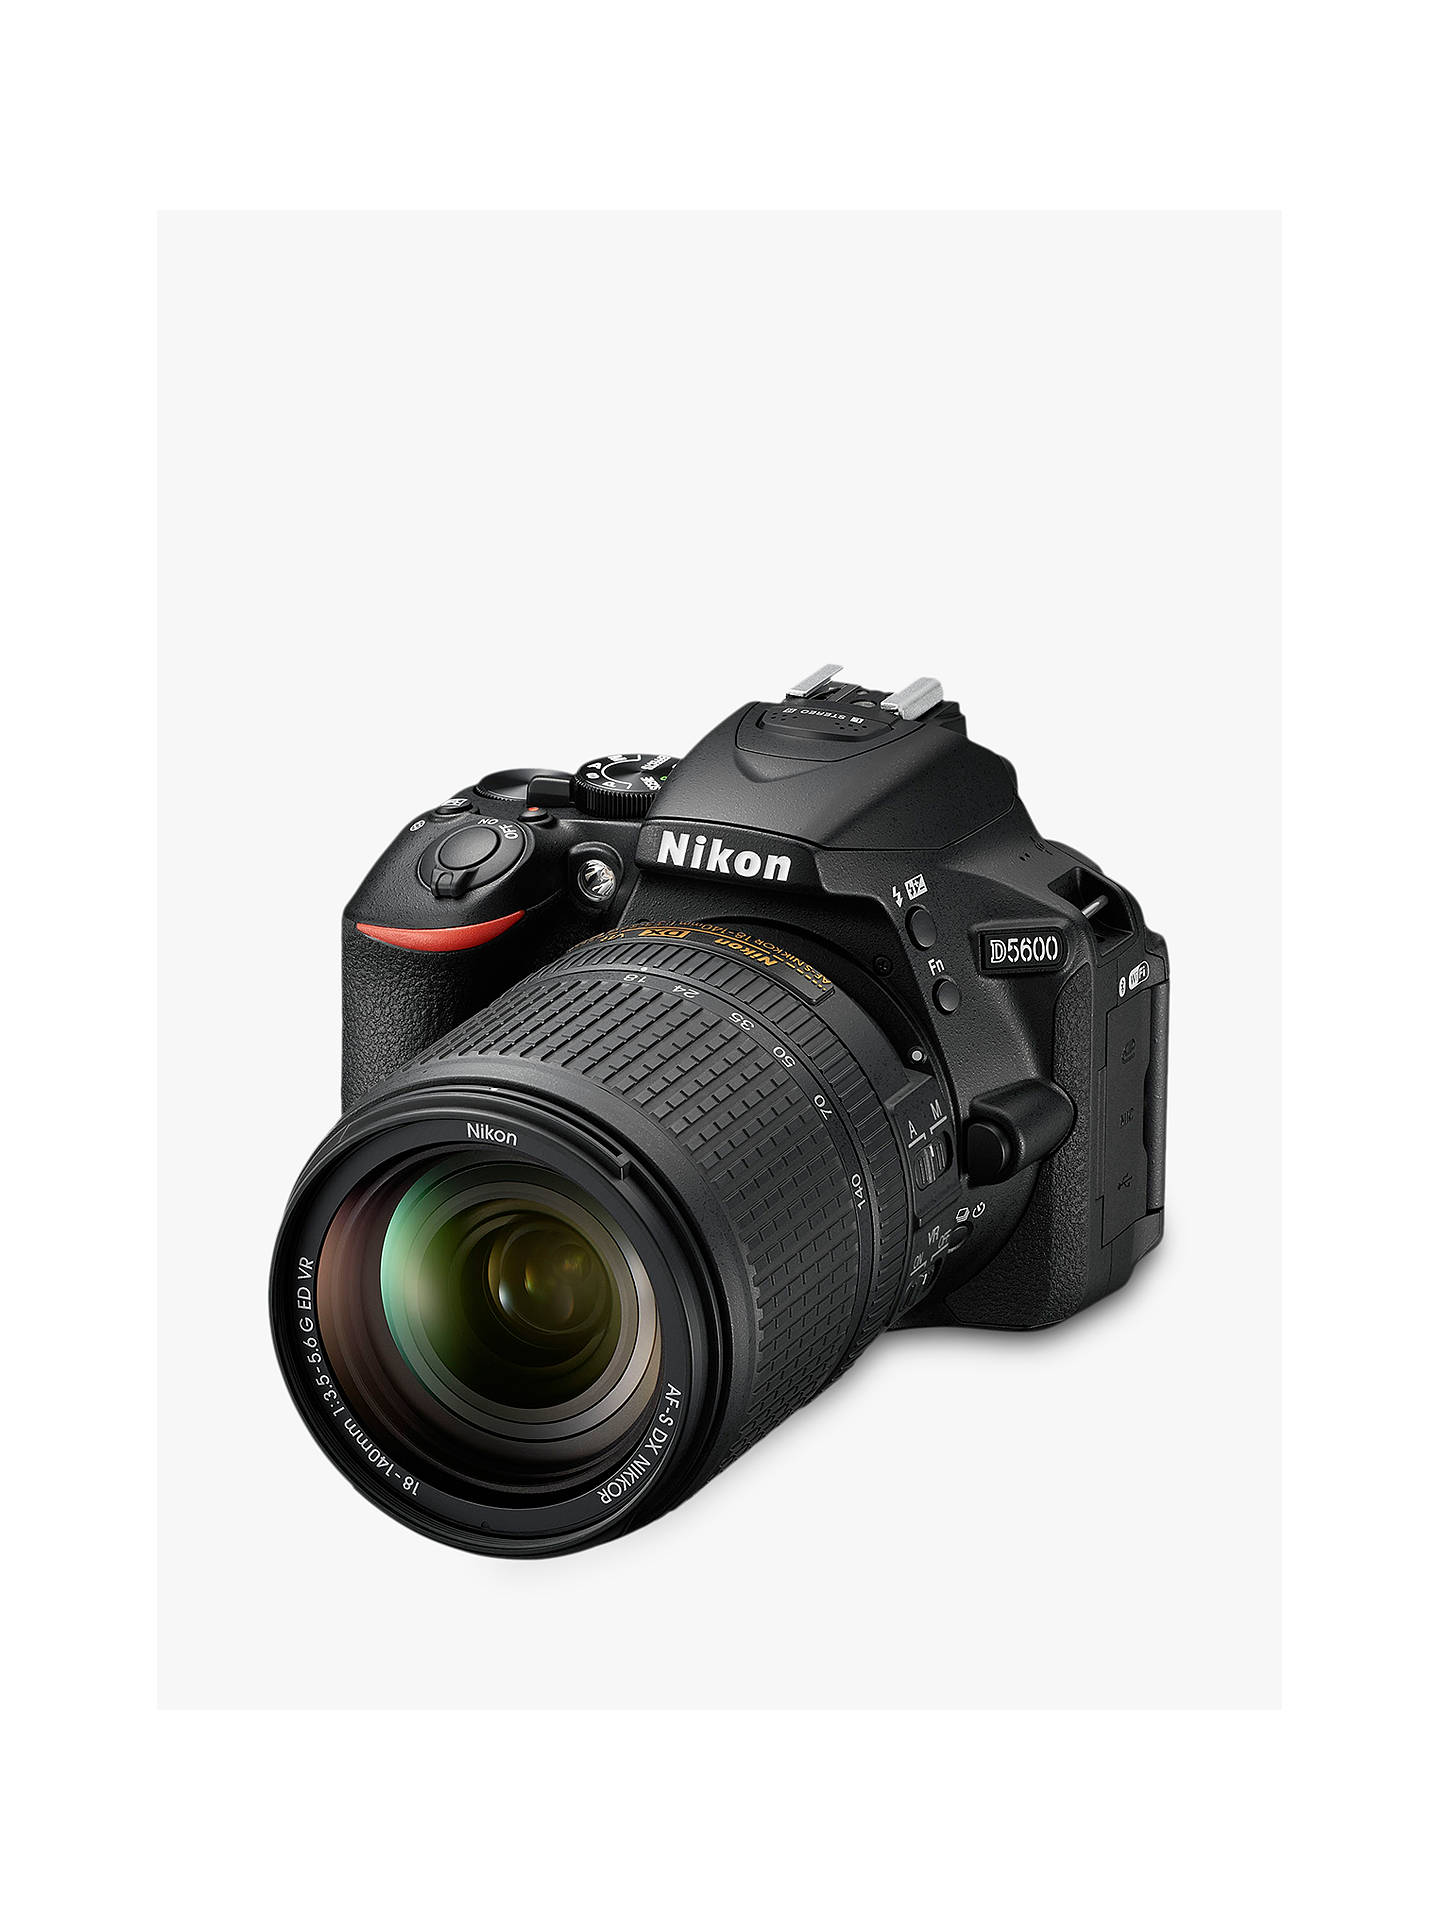 Nikon D5600 Digital SLR Camera with 18-140mm VR Lens, HD 1080p, 24.2MP